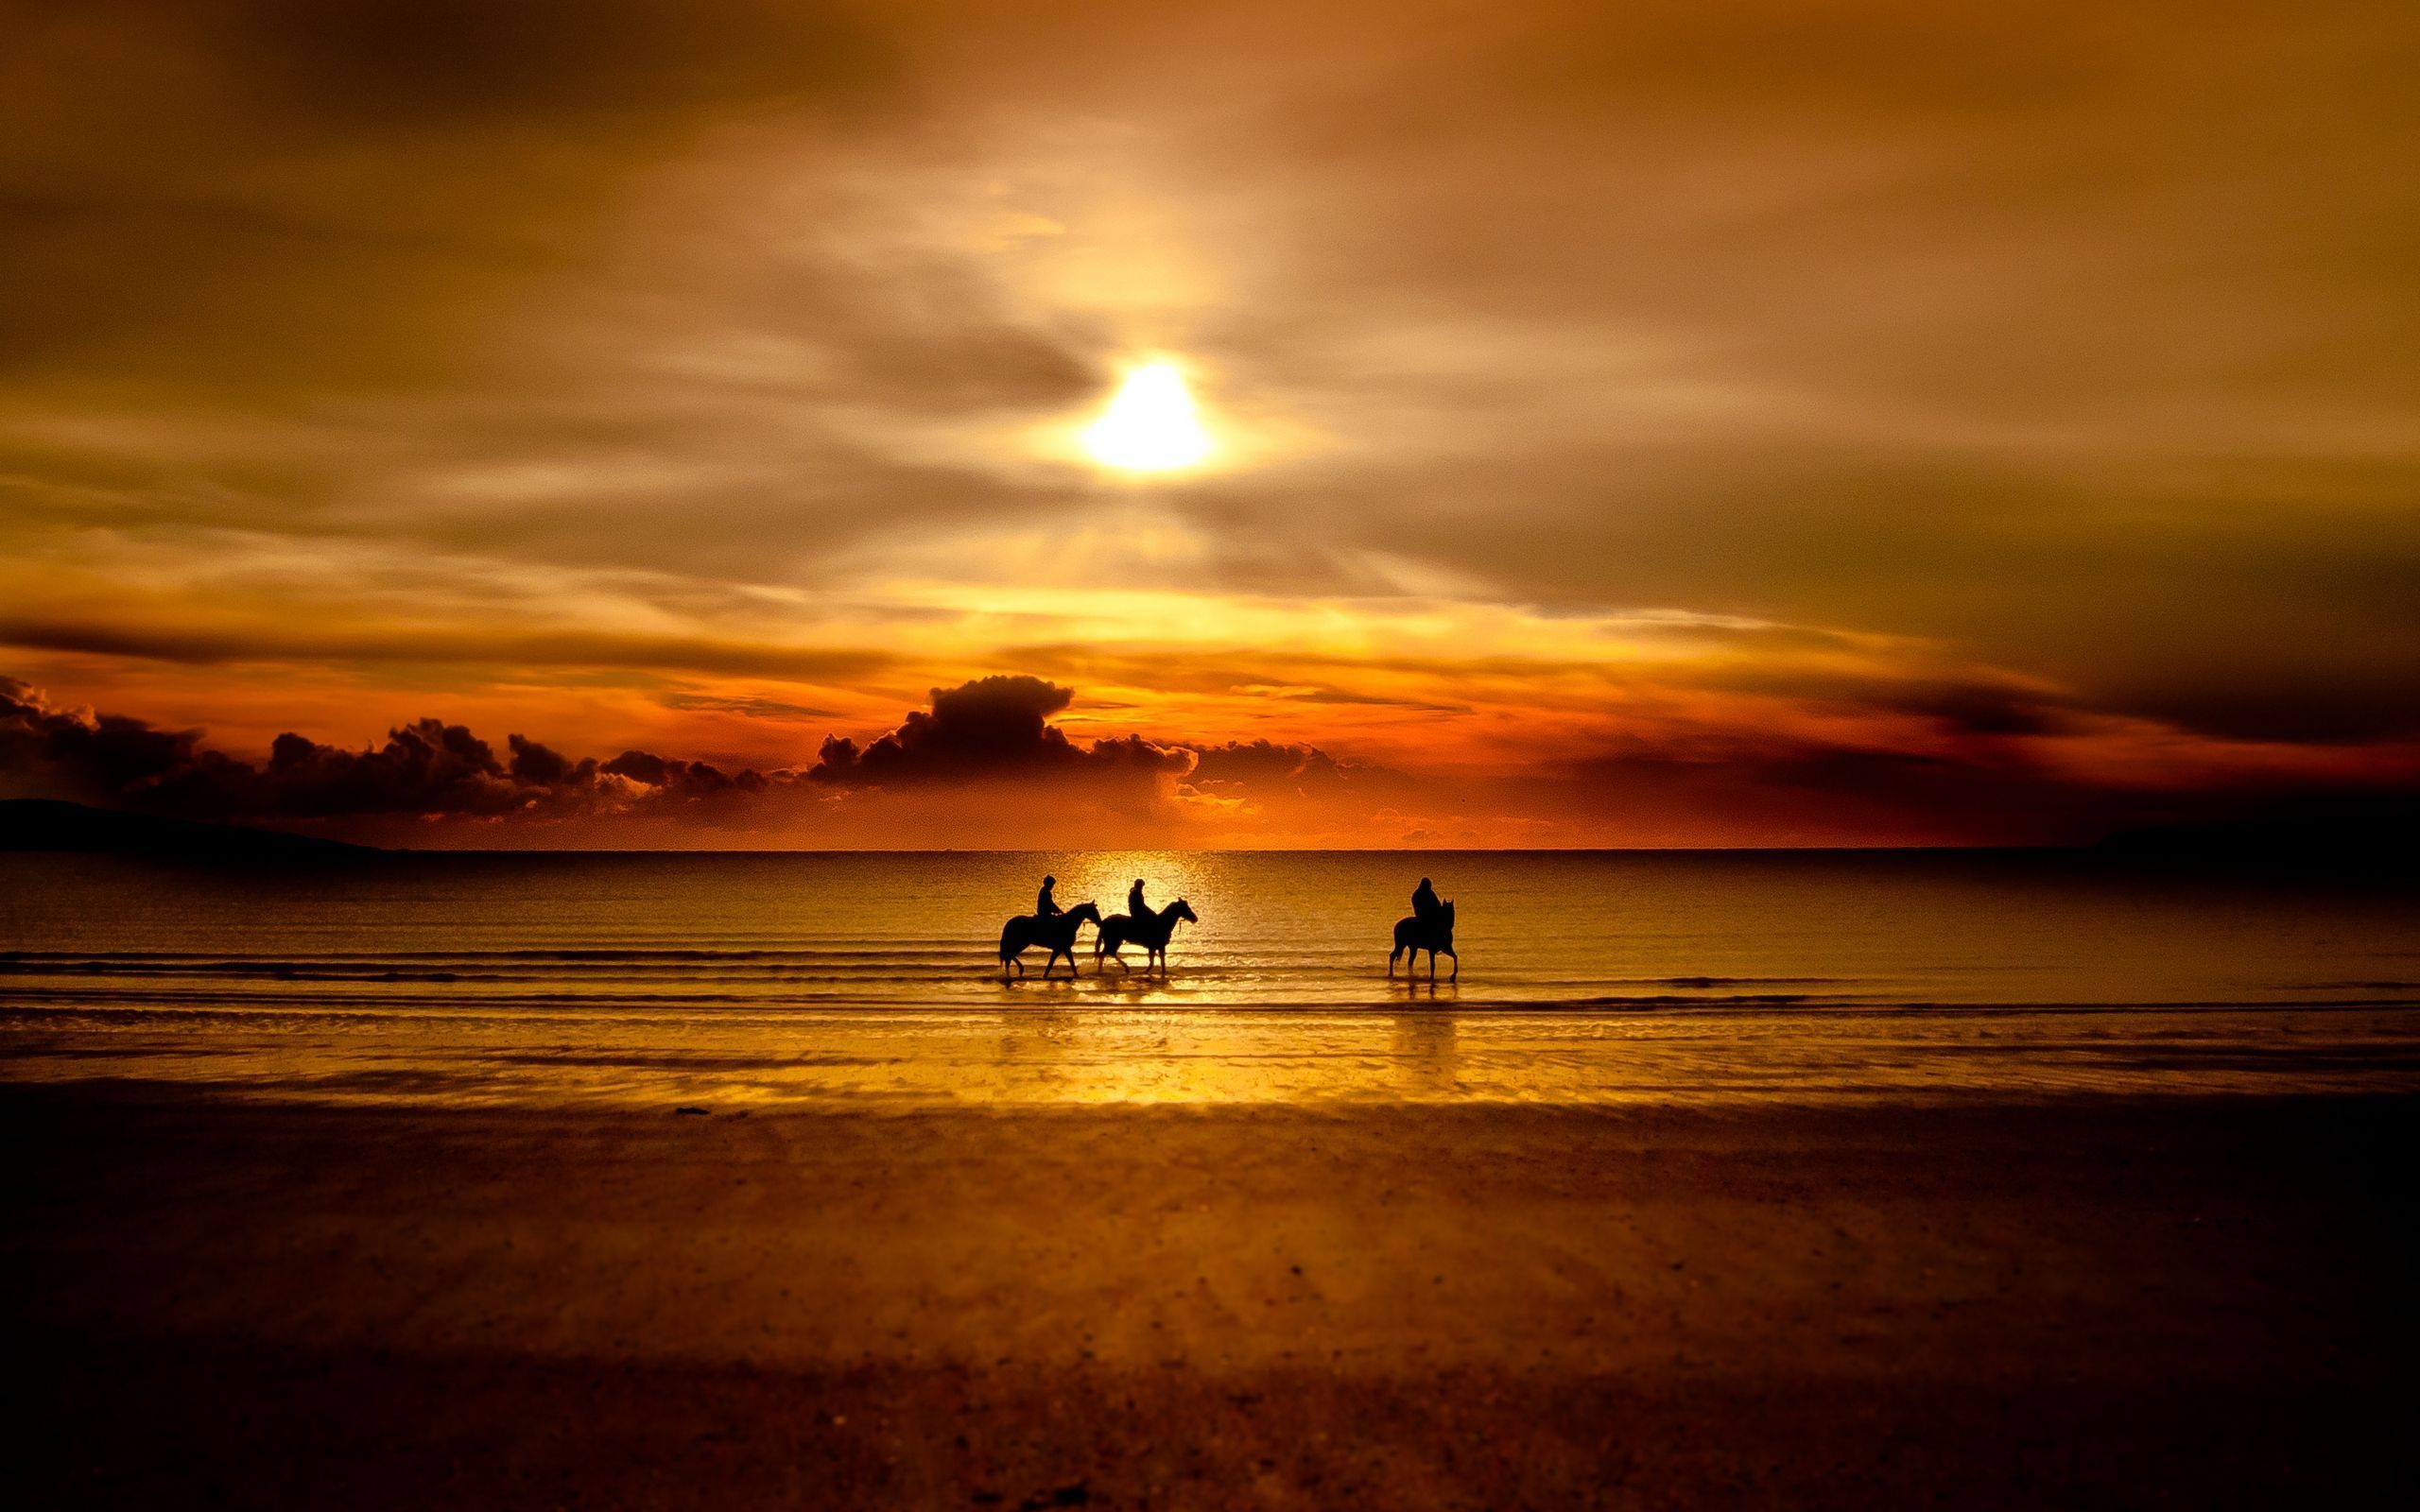 Top Horse Sunset Wallpaper Hd Images for Pinterest